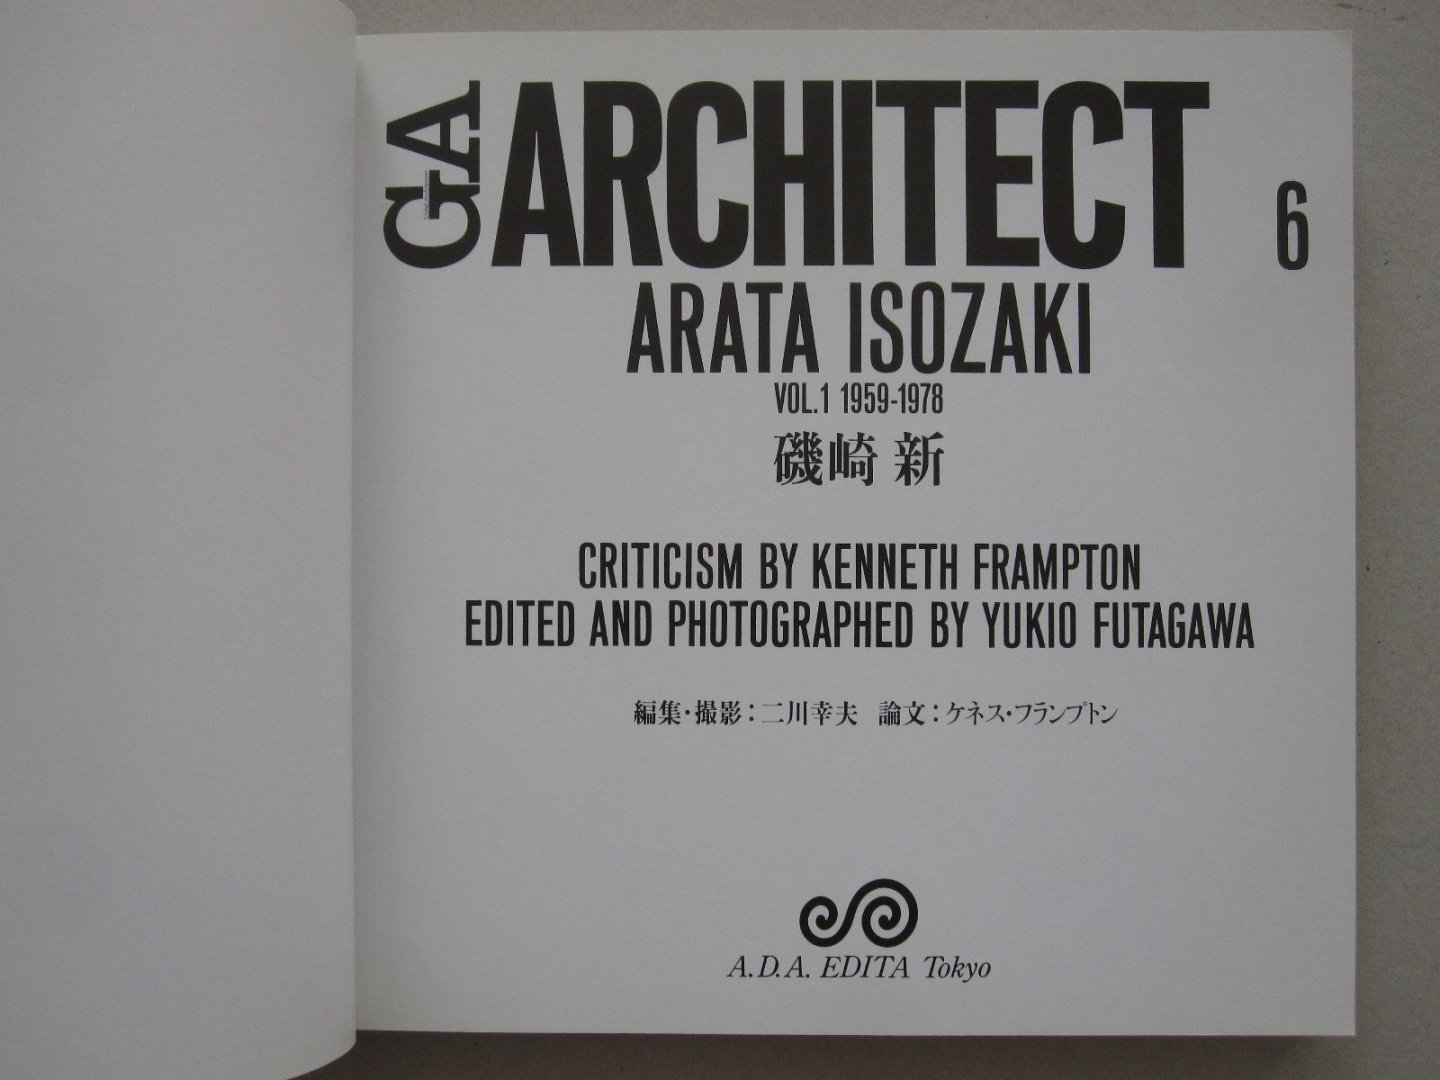 Kenneth Frampton / Yukio Futagawa (photography) - Arata Isozaki Vol. I 1959-1978 (GA Architect 6)